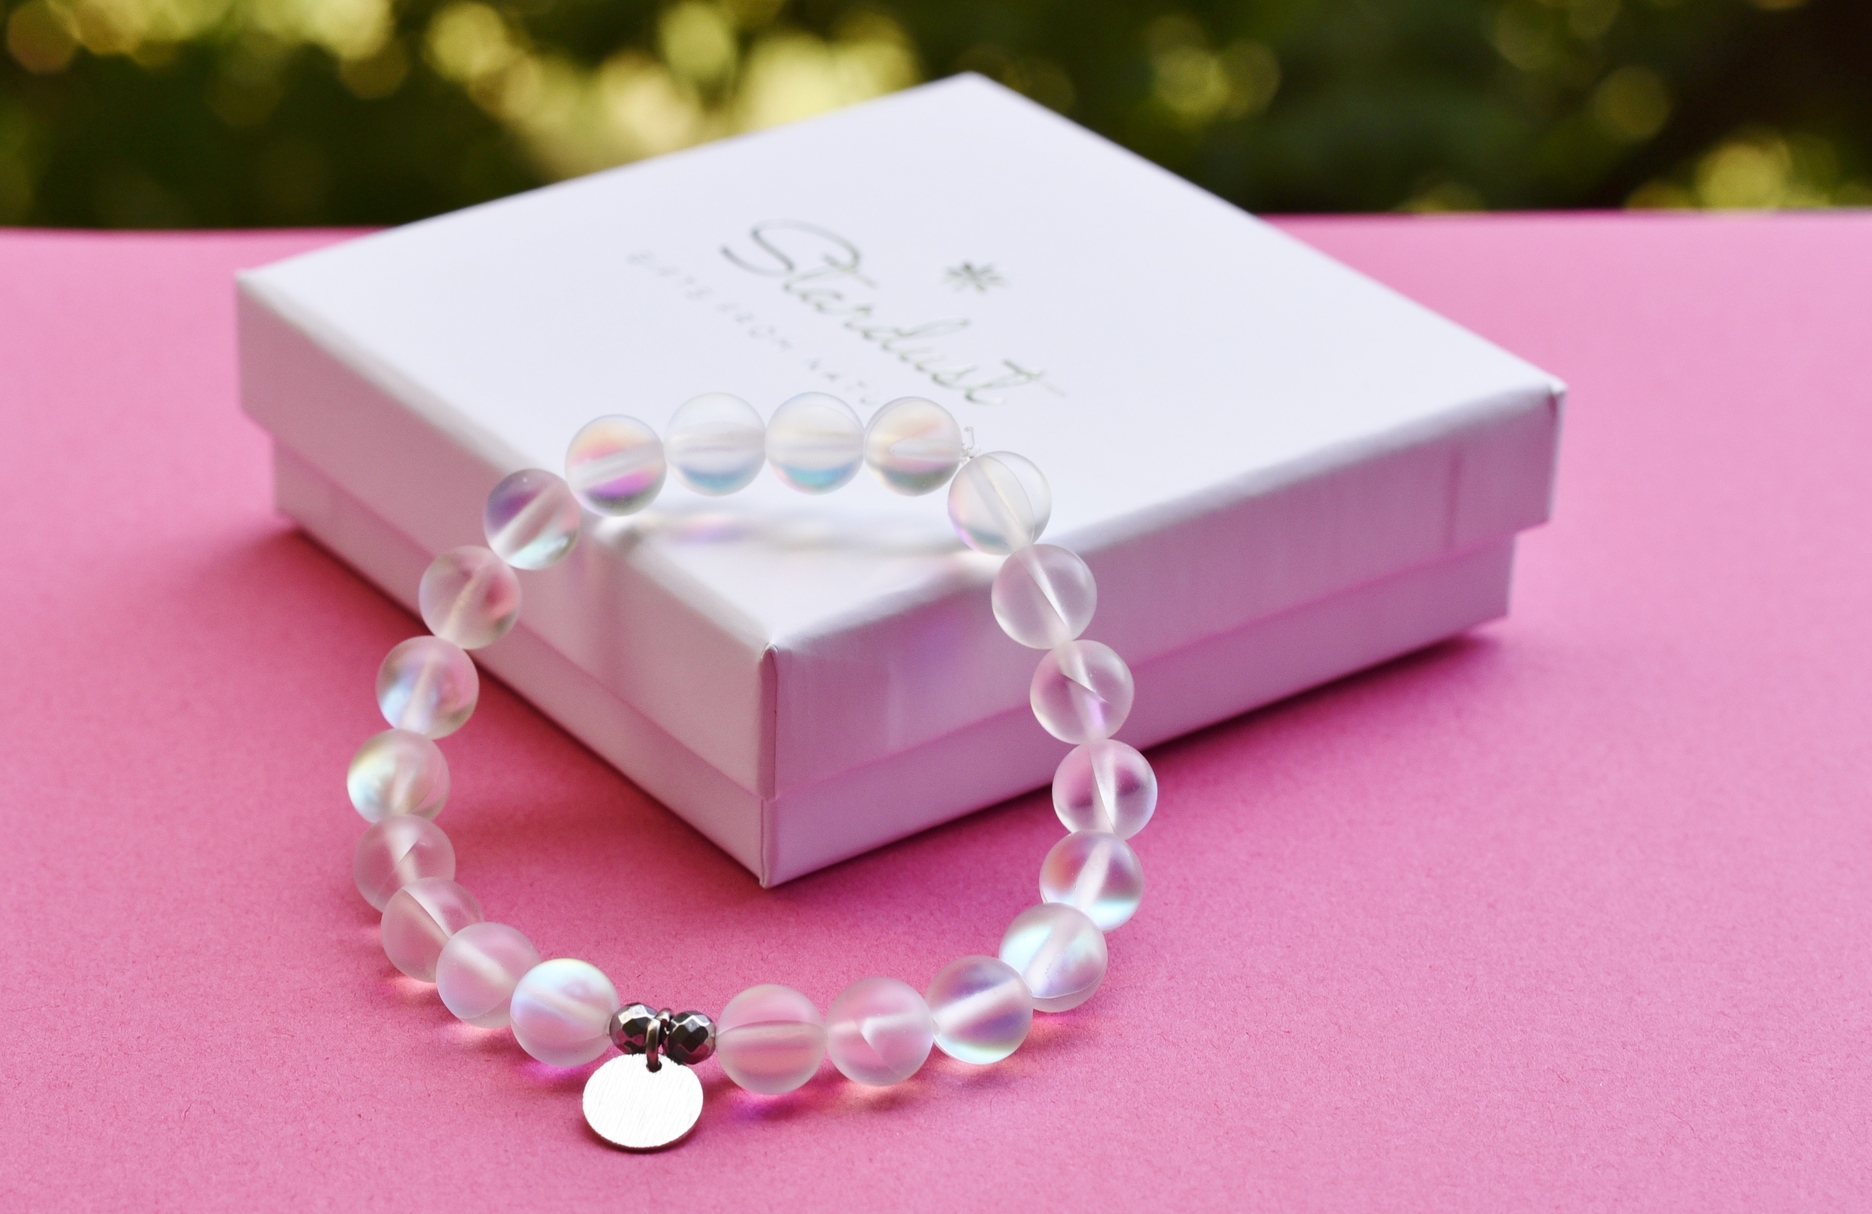 Enchanted Purple Mystic Mermaid Glass Friendship Bracelet with 8 mm Beads